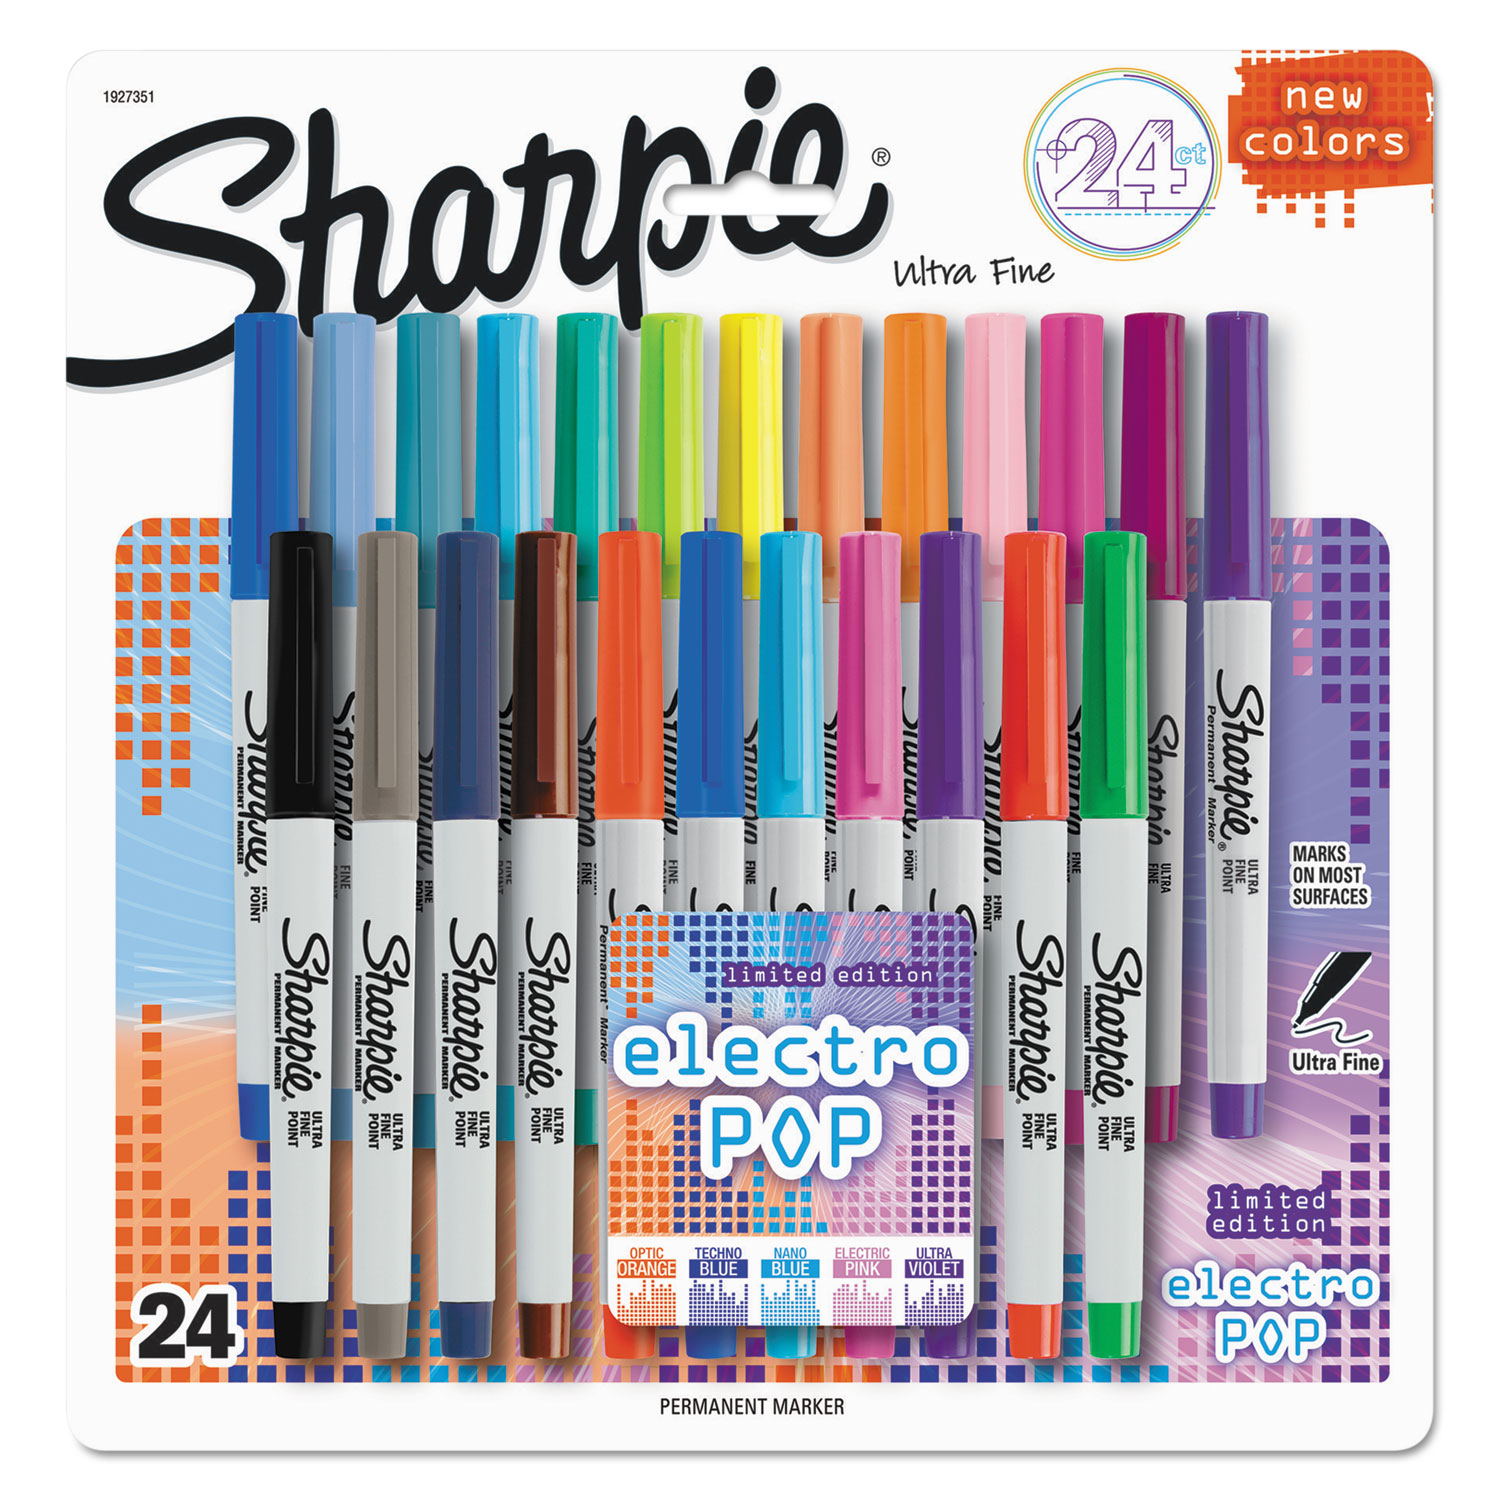  Sharpie 1927351 Ultra Fine Electro Pop Marker, Extra-Fine Needle Tip, Assorted Colors, 24/Set (SAN1927351) 